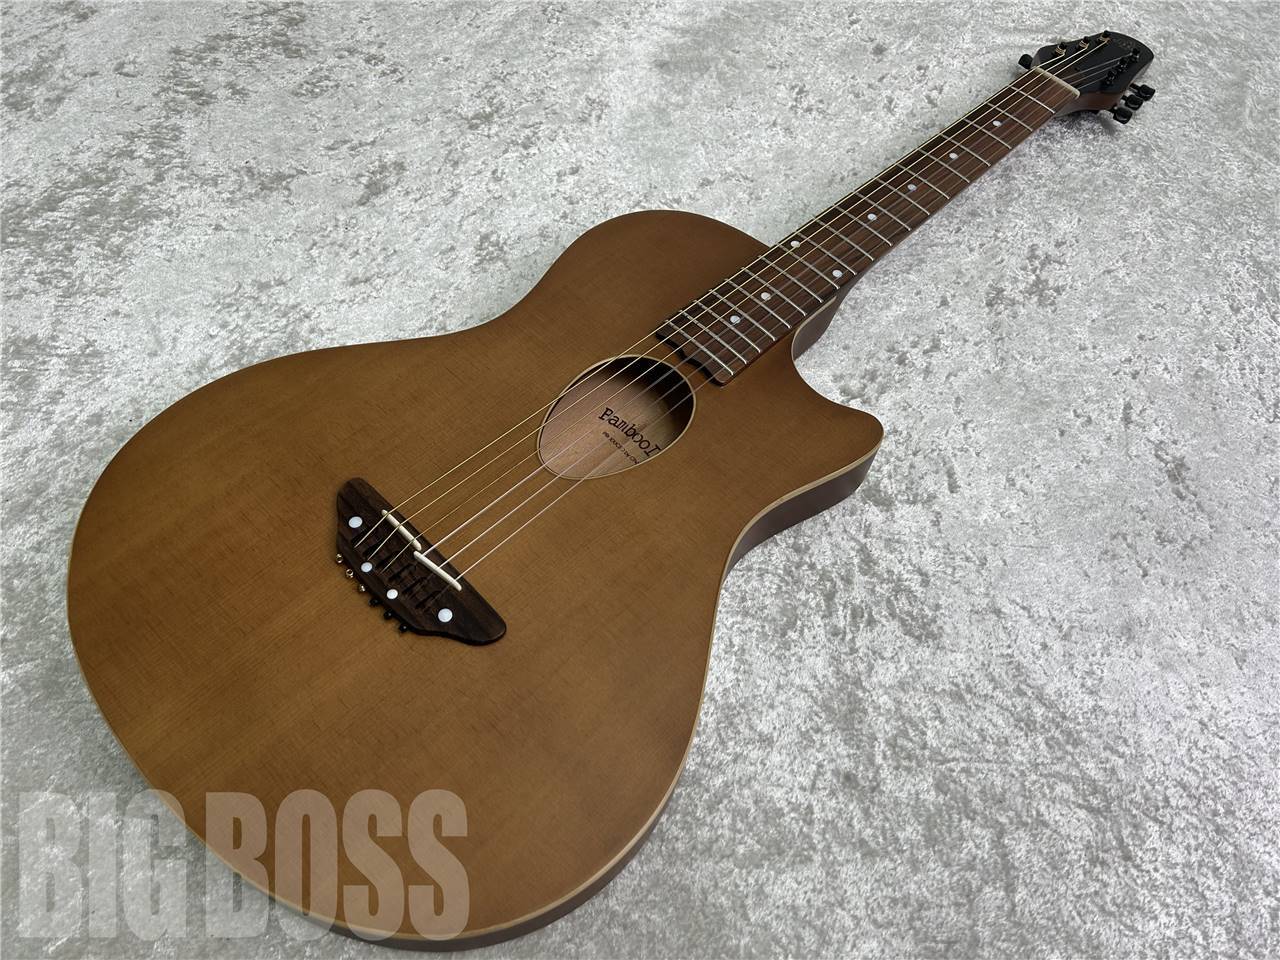 bambooinn-c 薄型アコースティックギター - 楽器